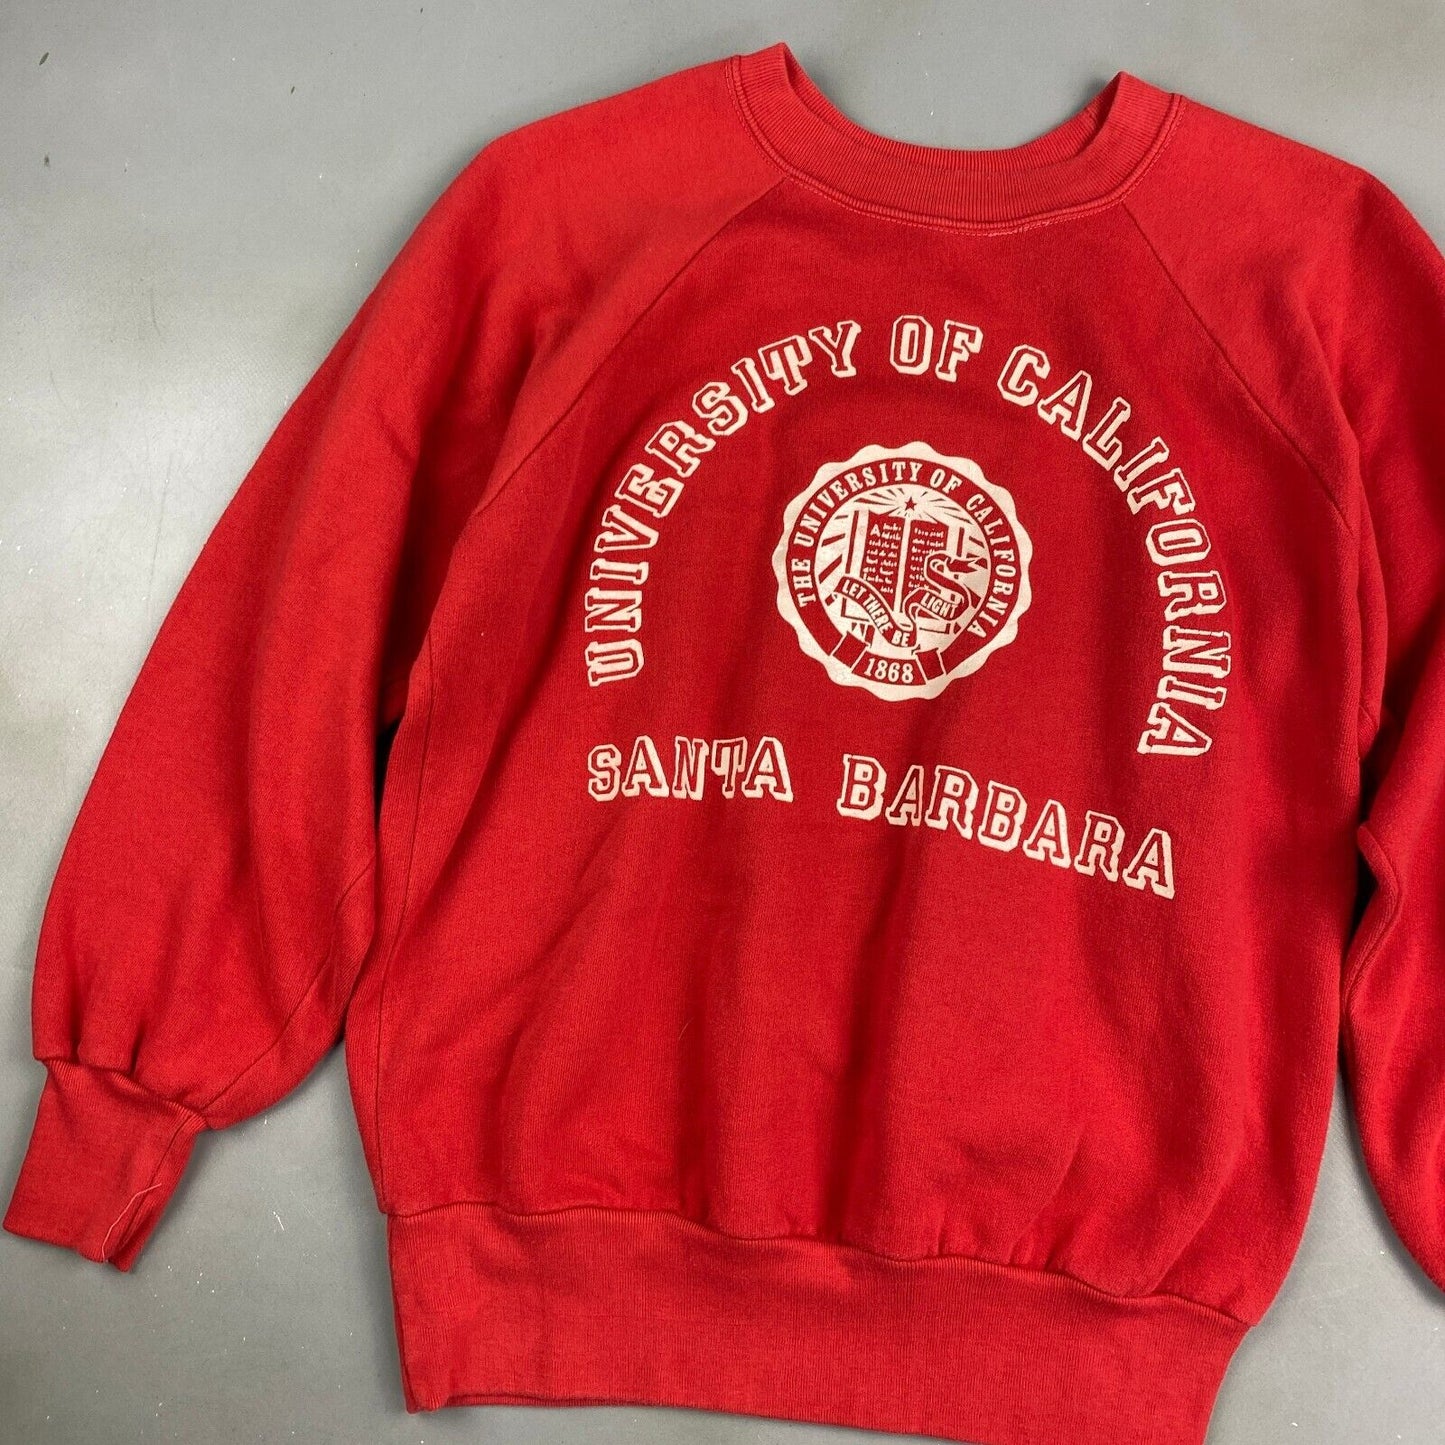 VINTAGE 80s University Of California Santa Barbara Sweater sz Small Adult